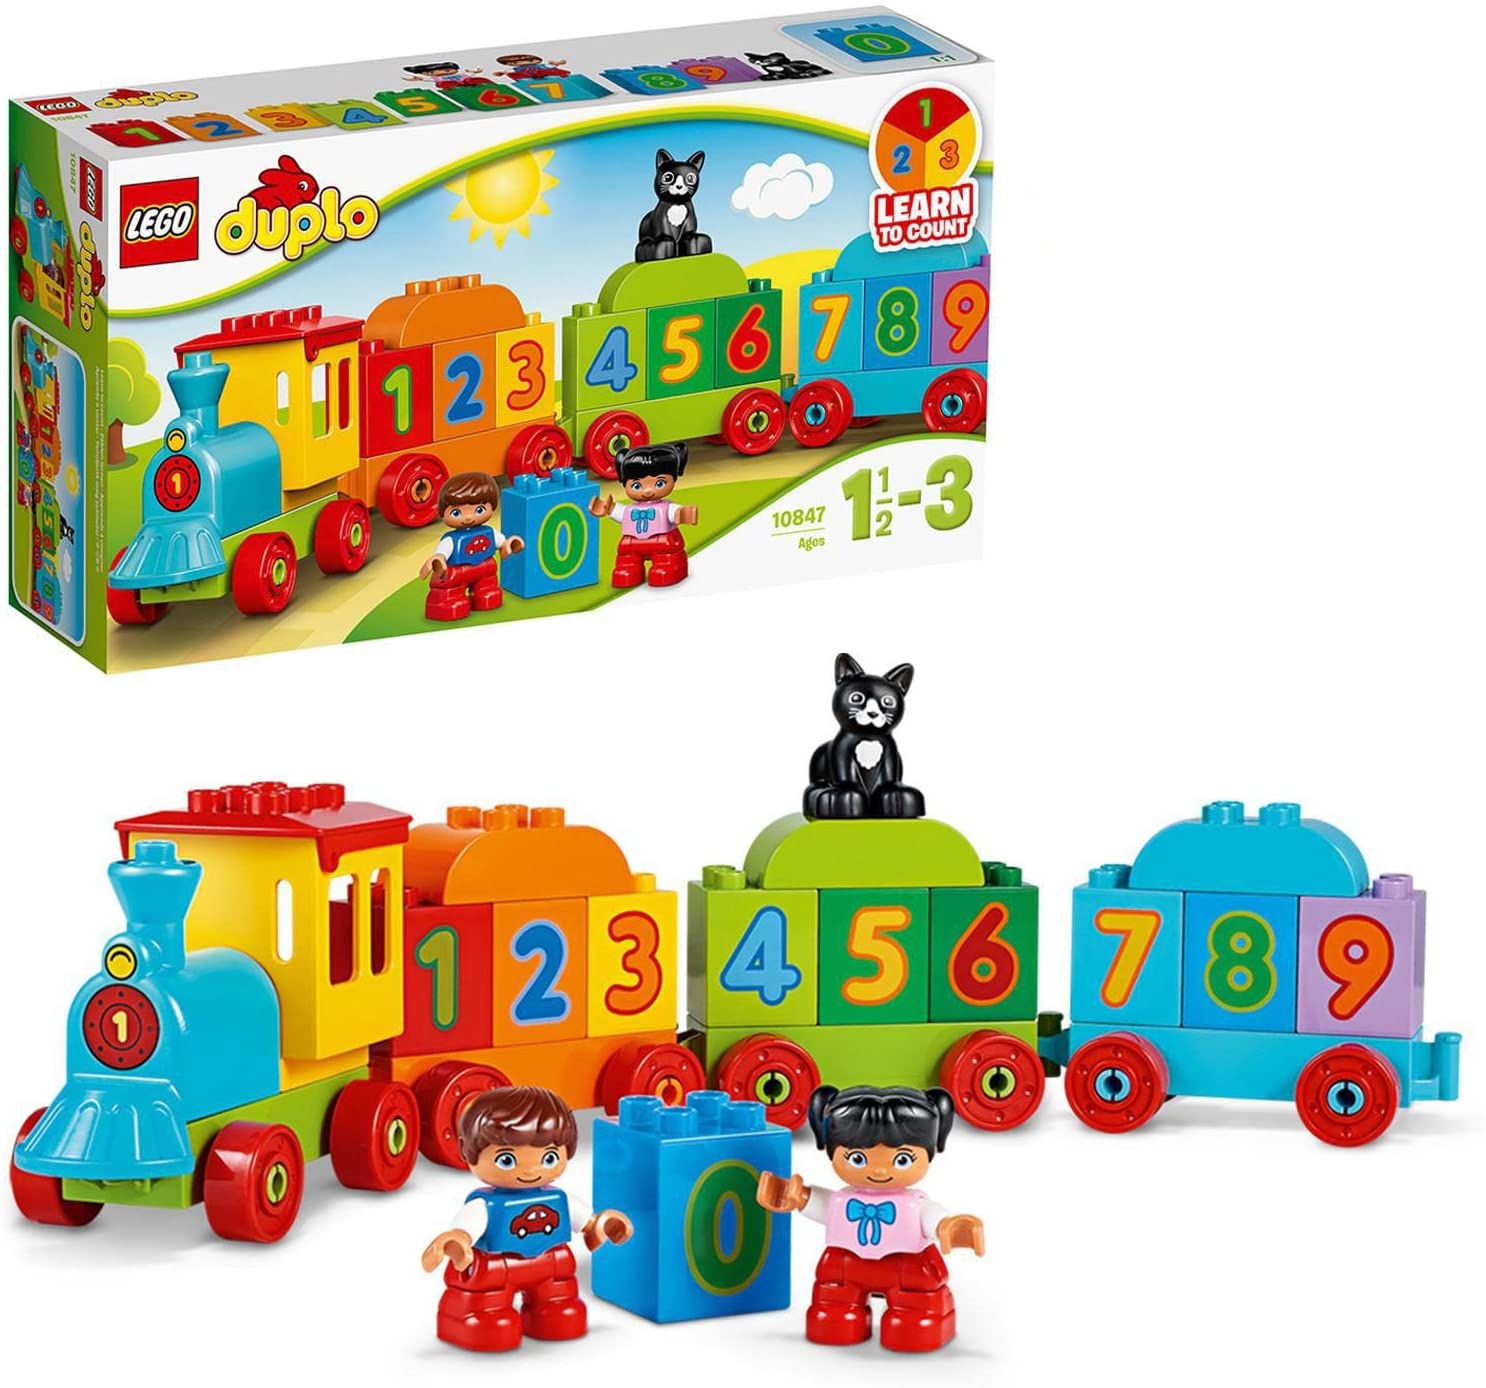 LEGO Duplo 10847 - Number Train, Preschool Toy, Single